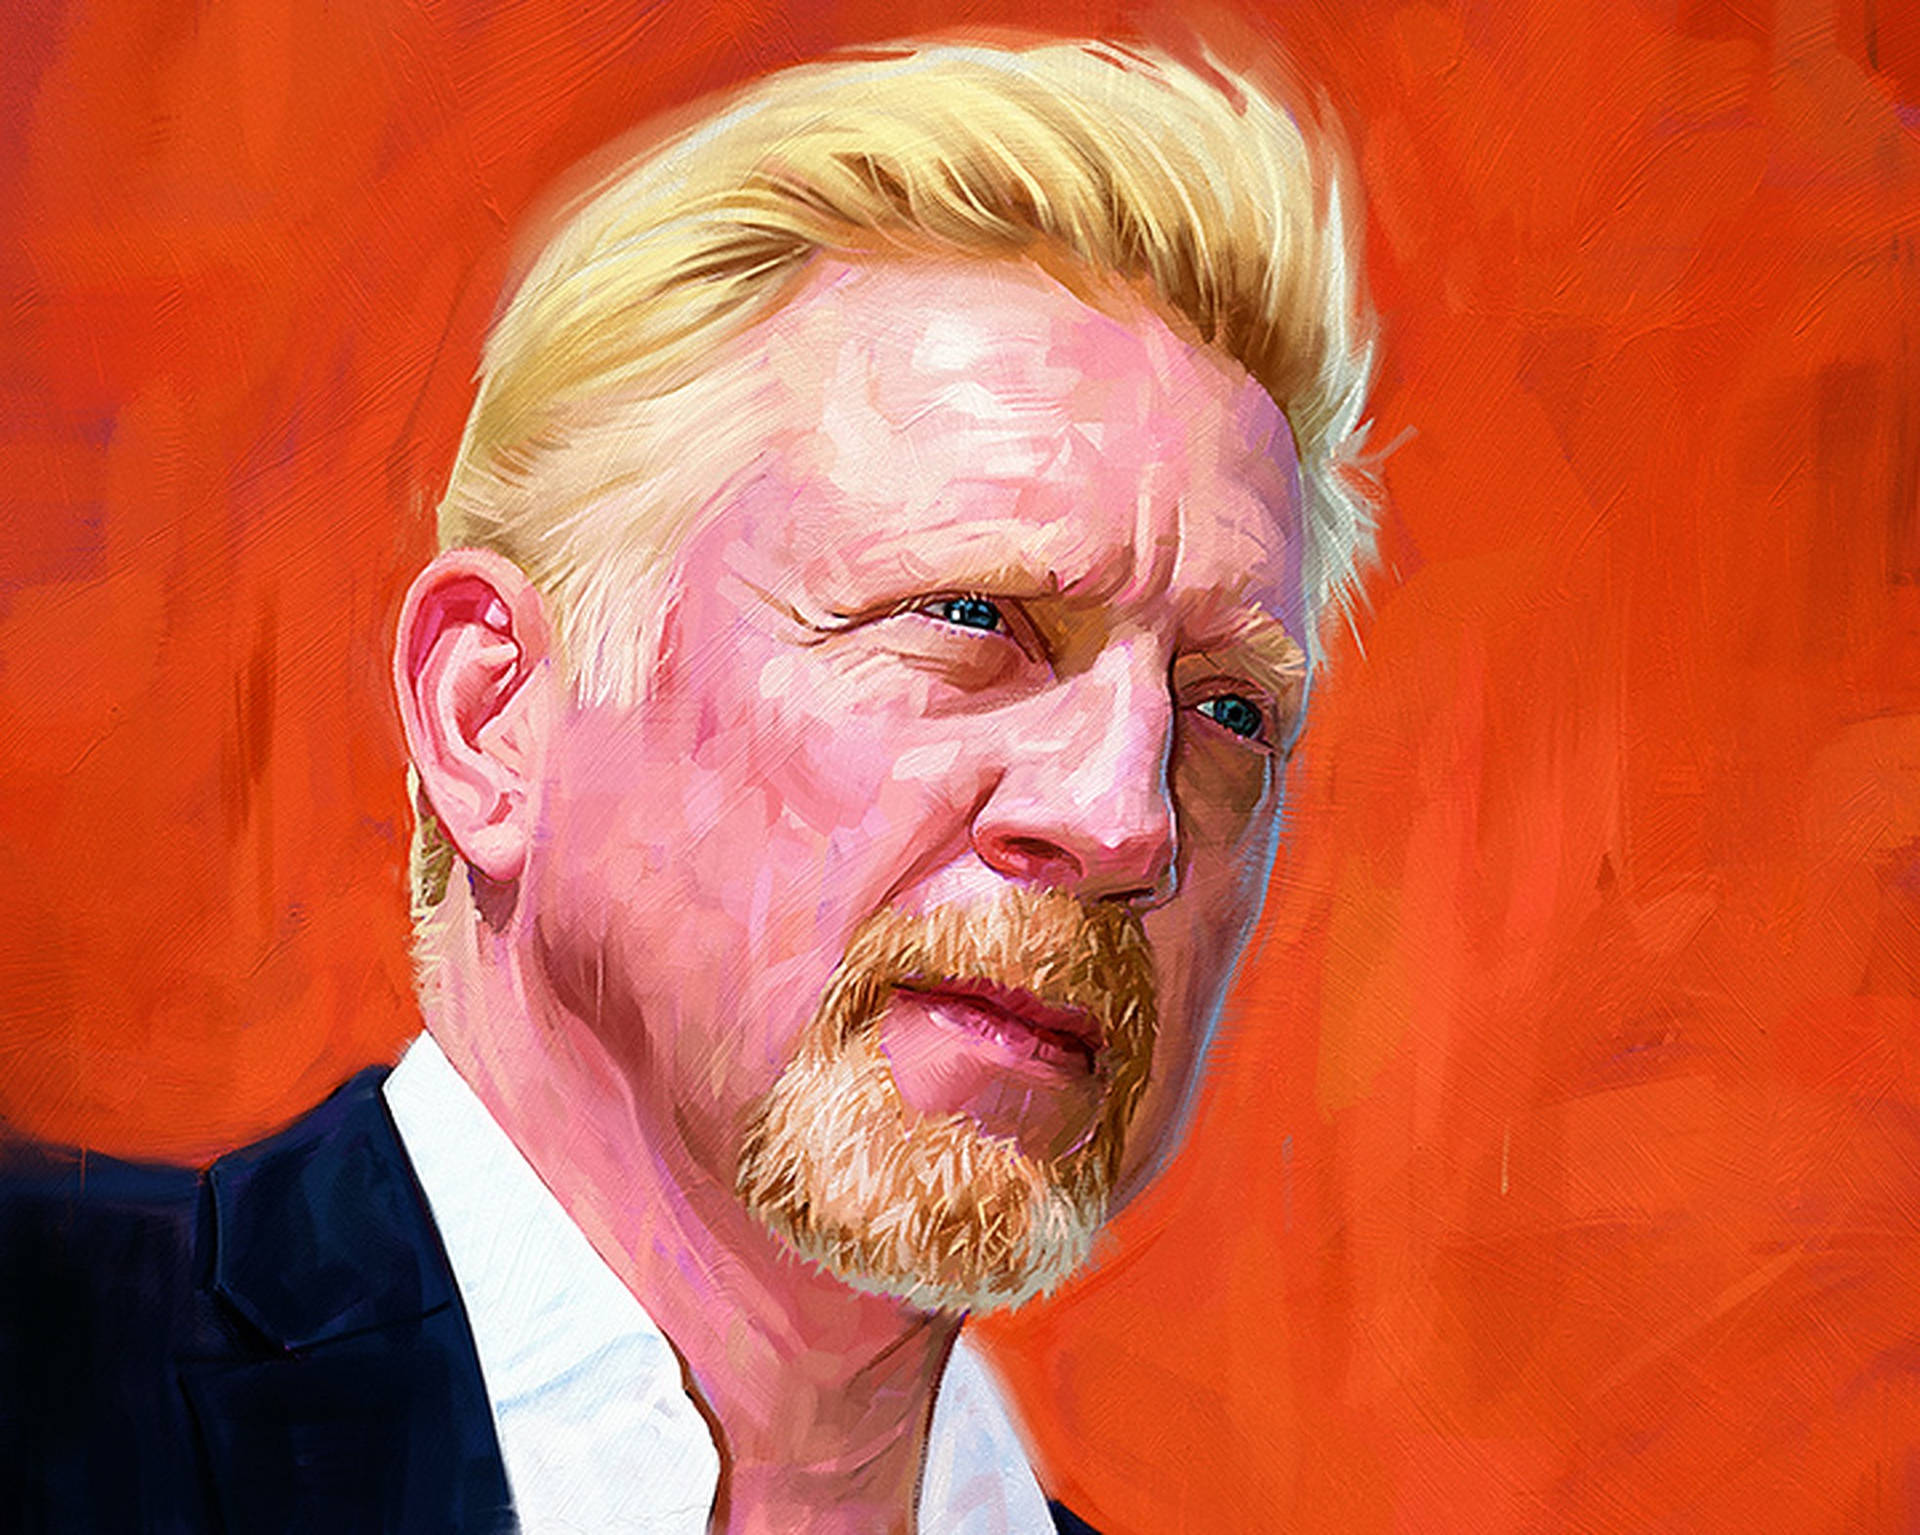 Boris Becker Digital Art Wallpaper